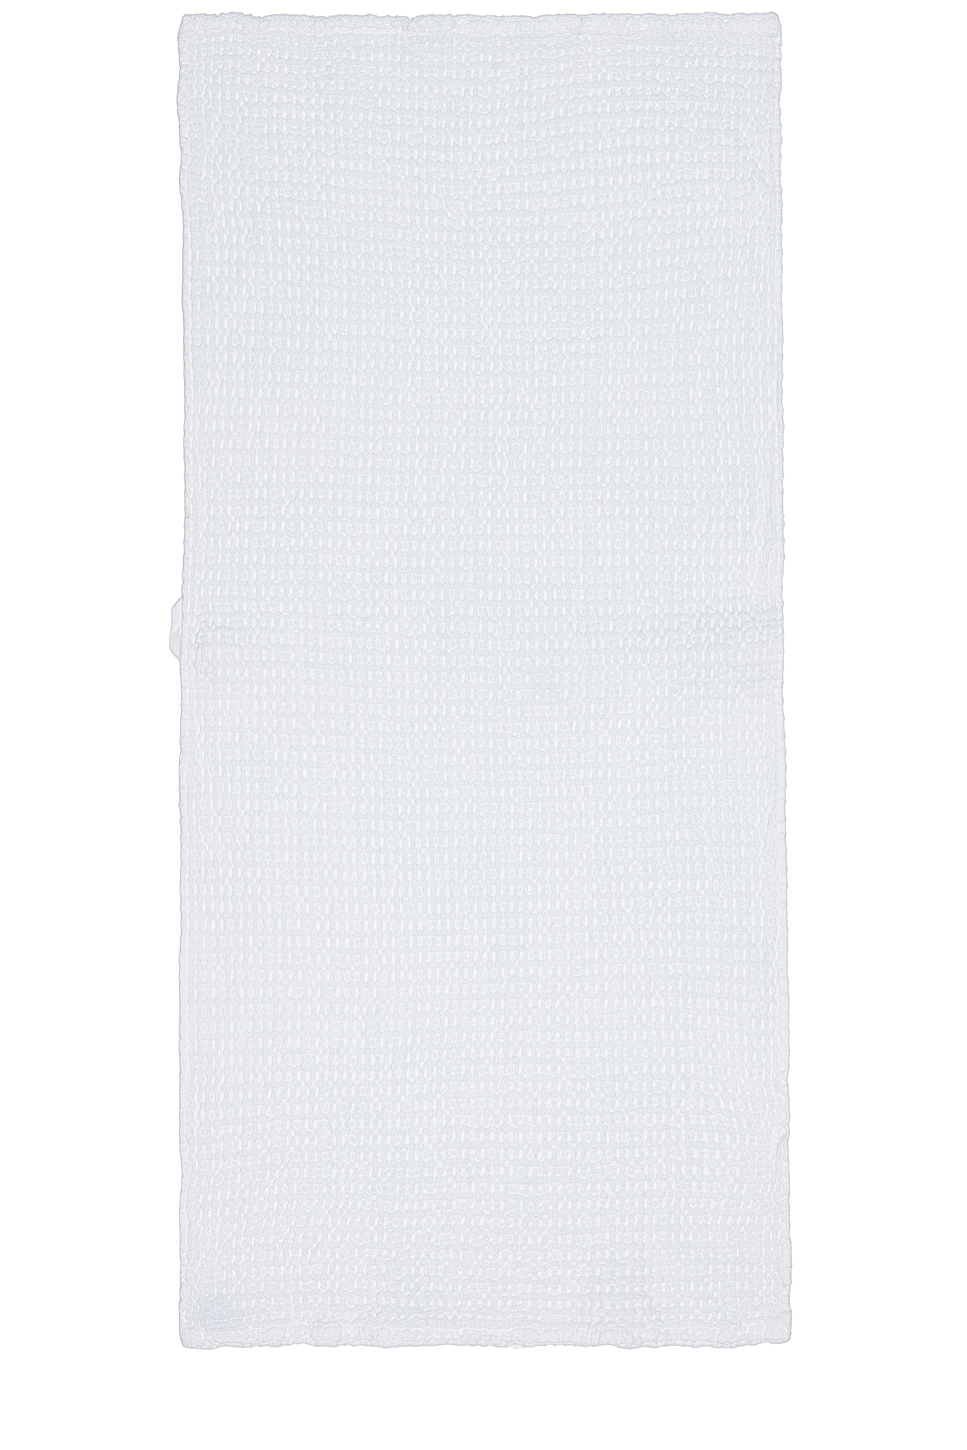 Hawkins New York Simple Waffle Towels - Grey - Sheet